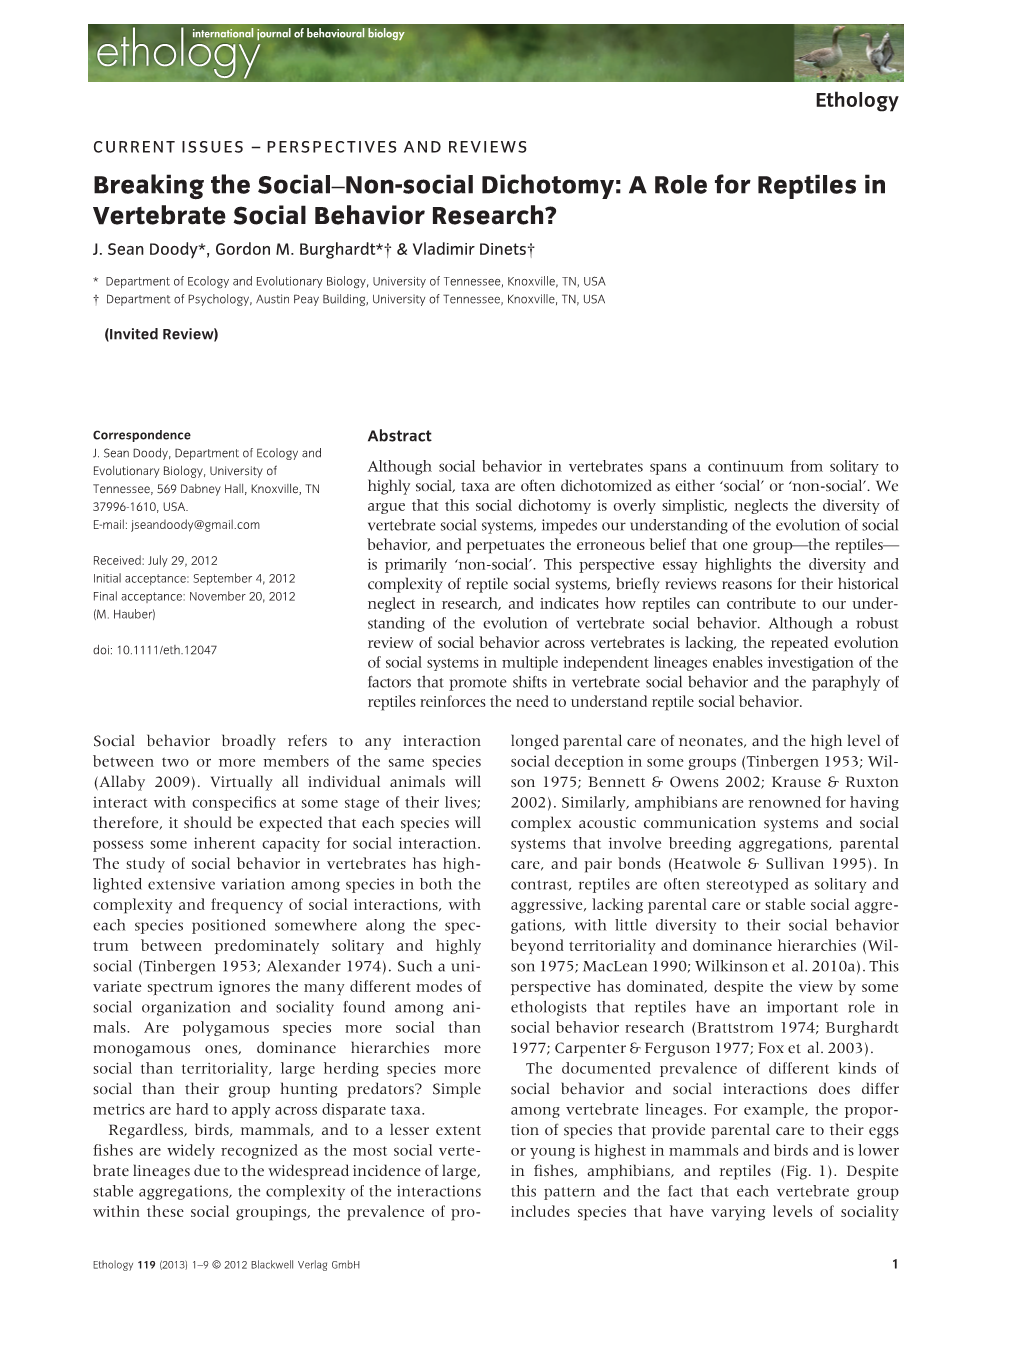 A Role for Reptiles in Vertebrate Social Behavior Research? J